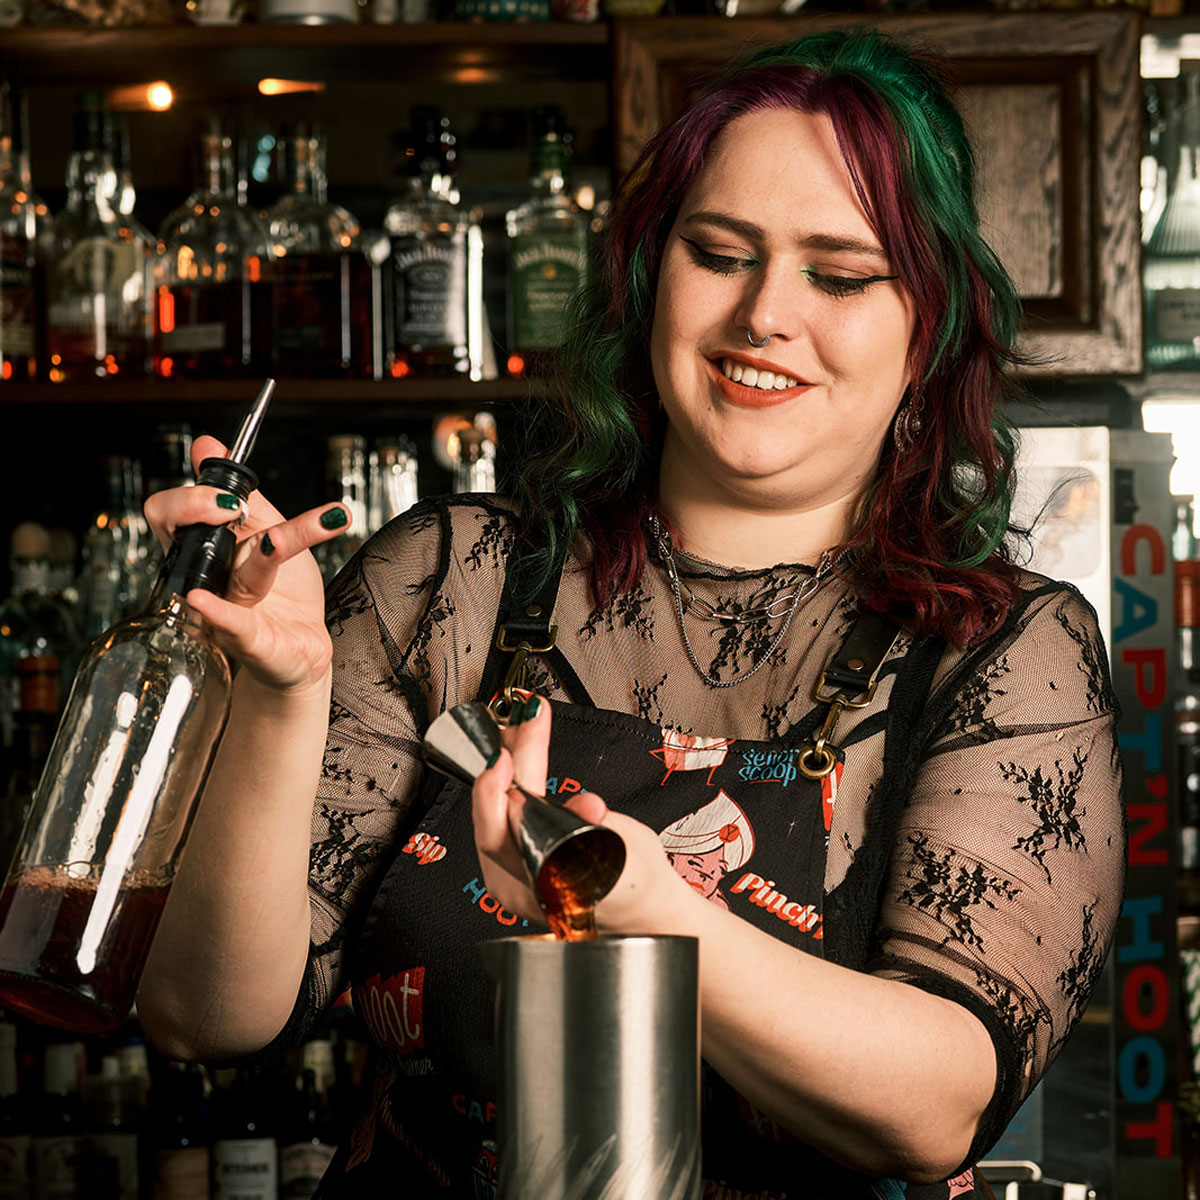 A woman with dark hair creates a complicated drink behind a bar